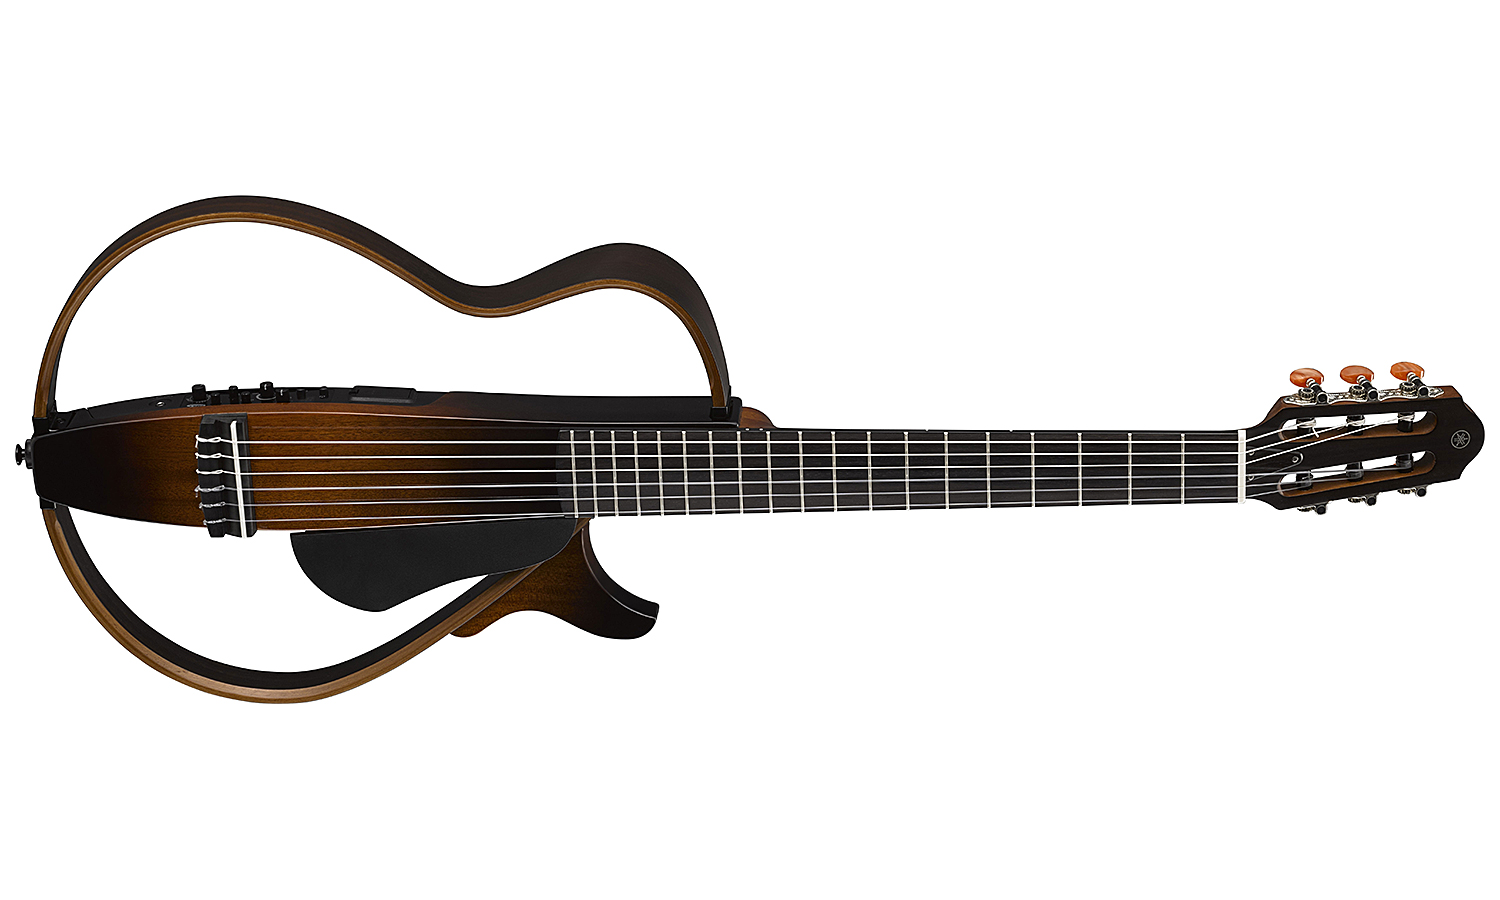 Yamaha Silent Guitar Slg200n - Tobacco Brown Sunburst Gloss - Classical guitar 4/4 size - Variation 1